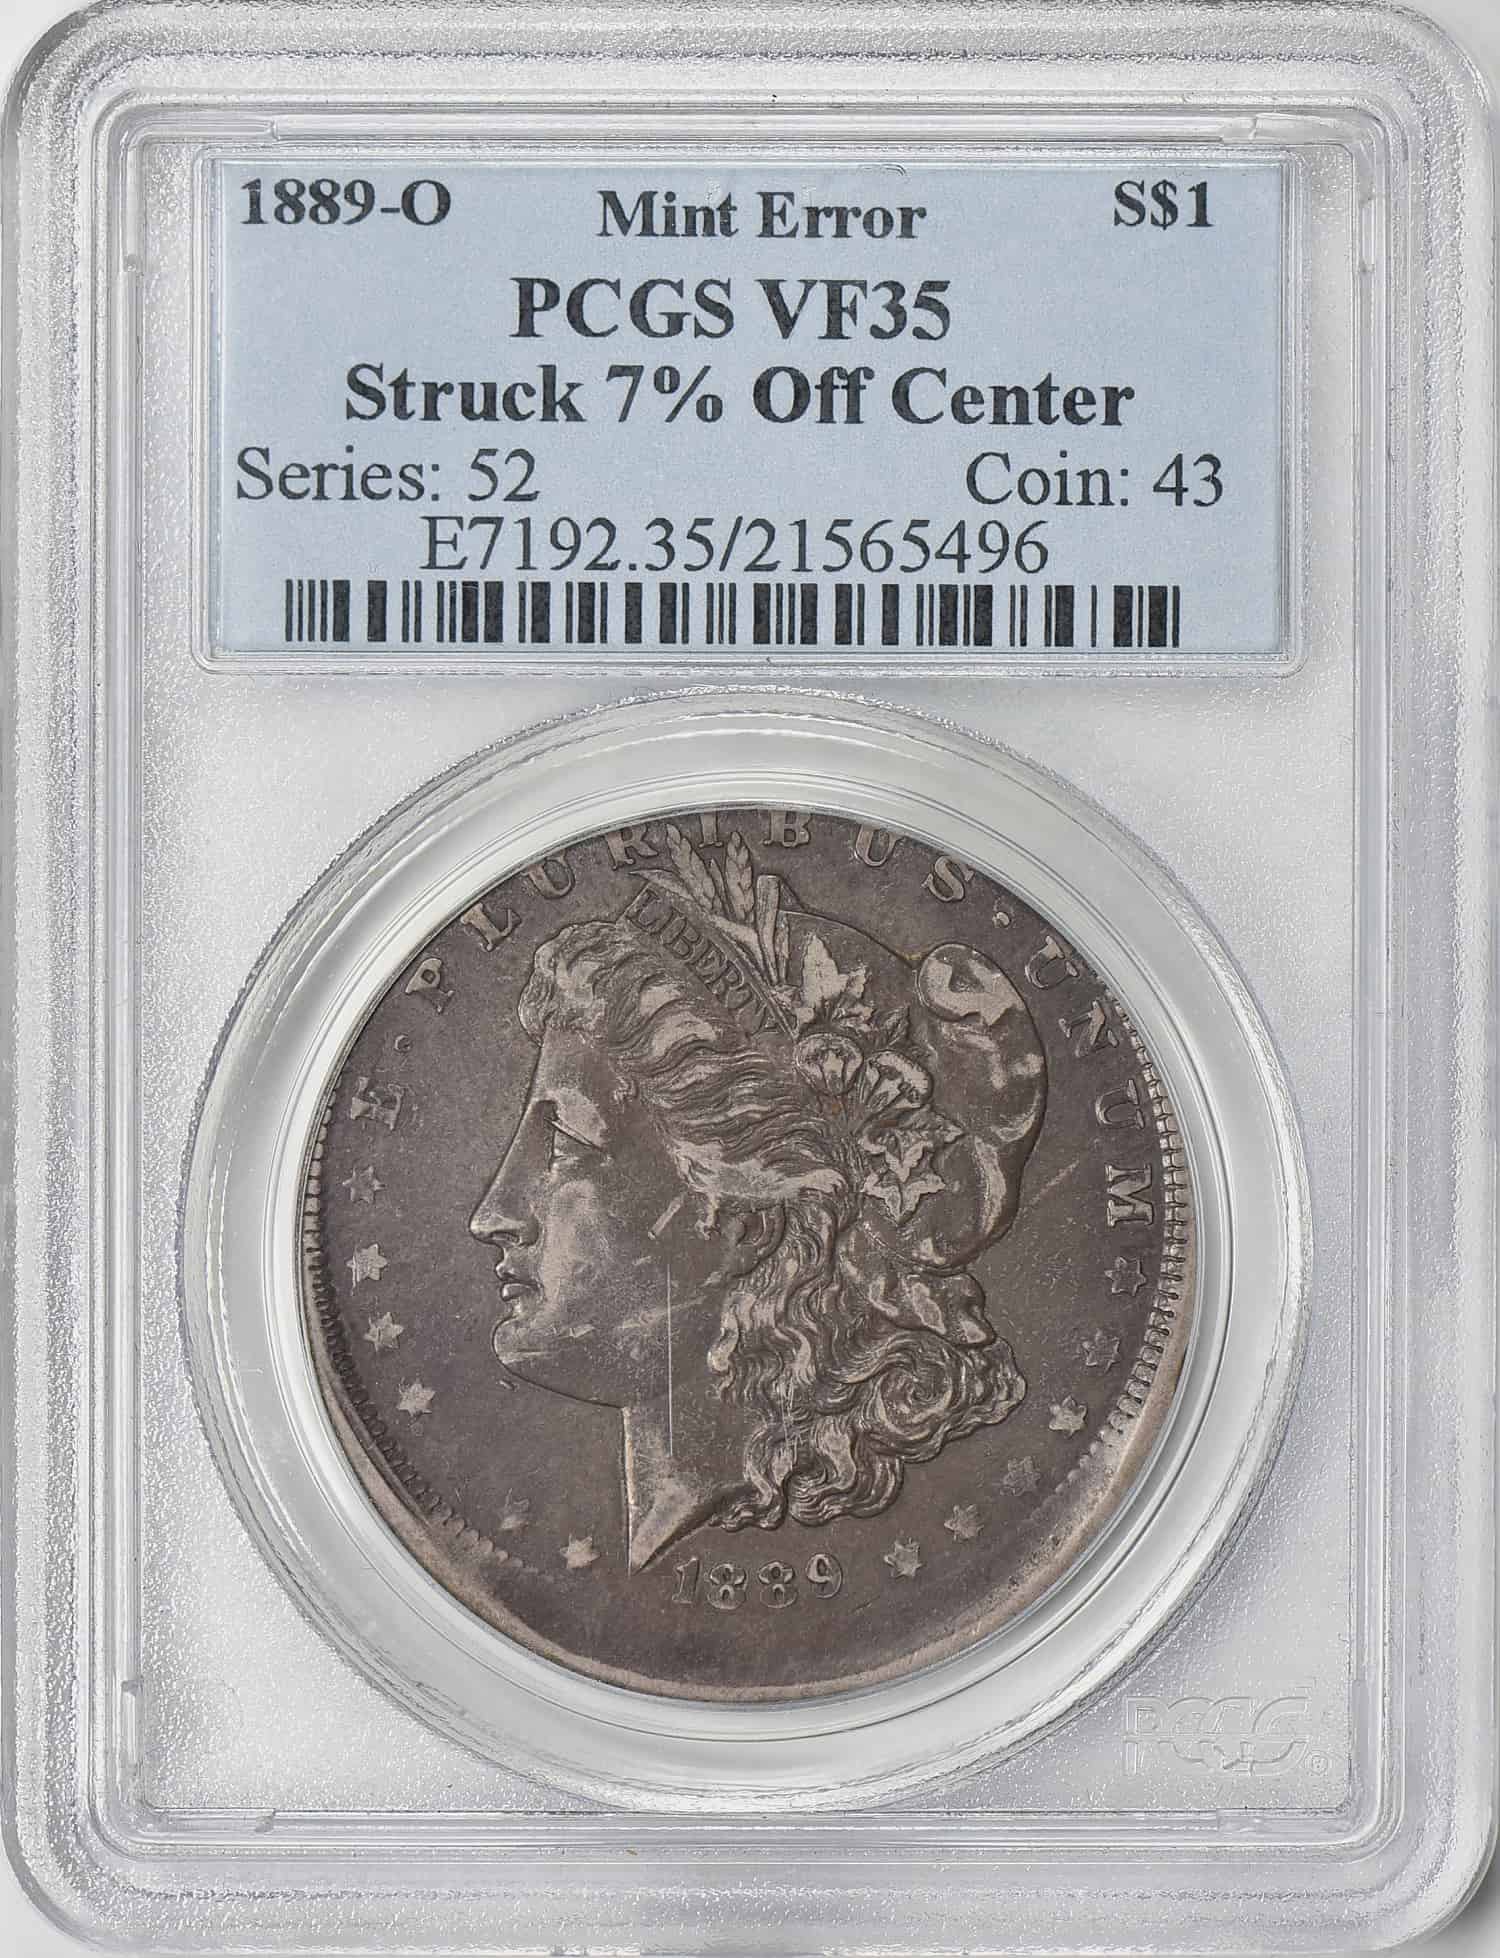 1889 Silver Dollar off-center error